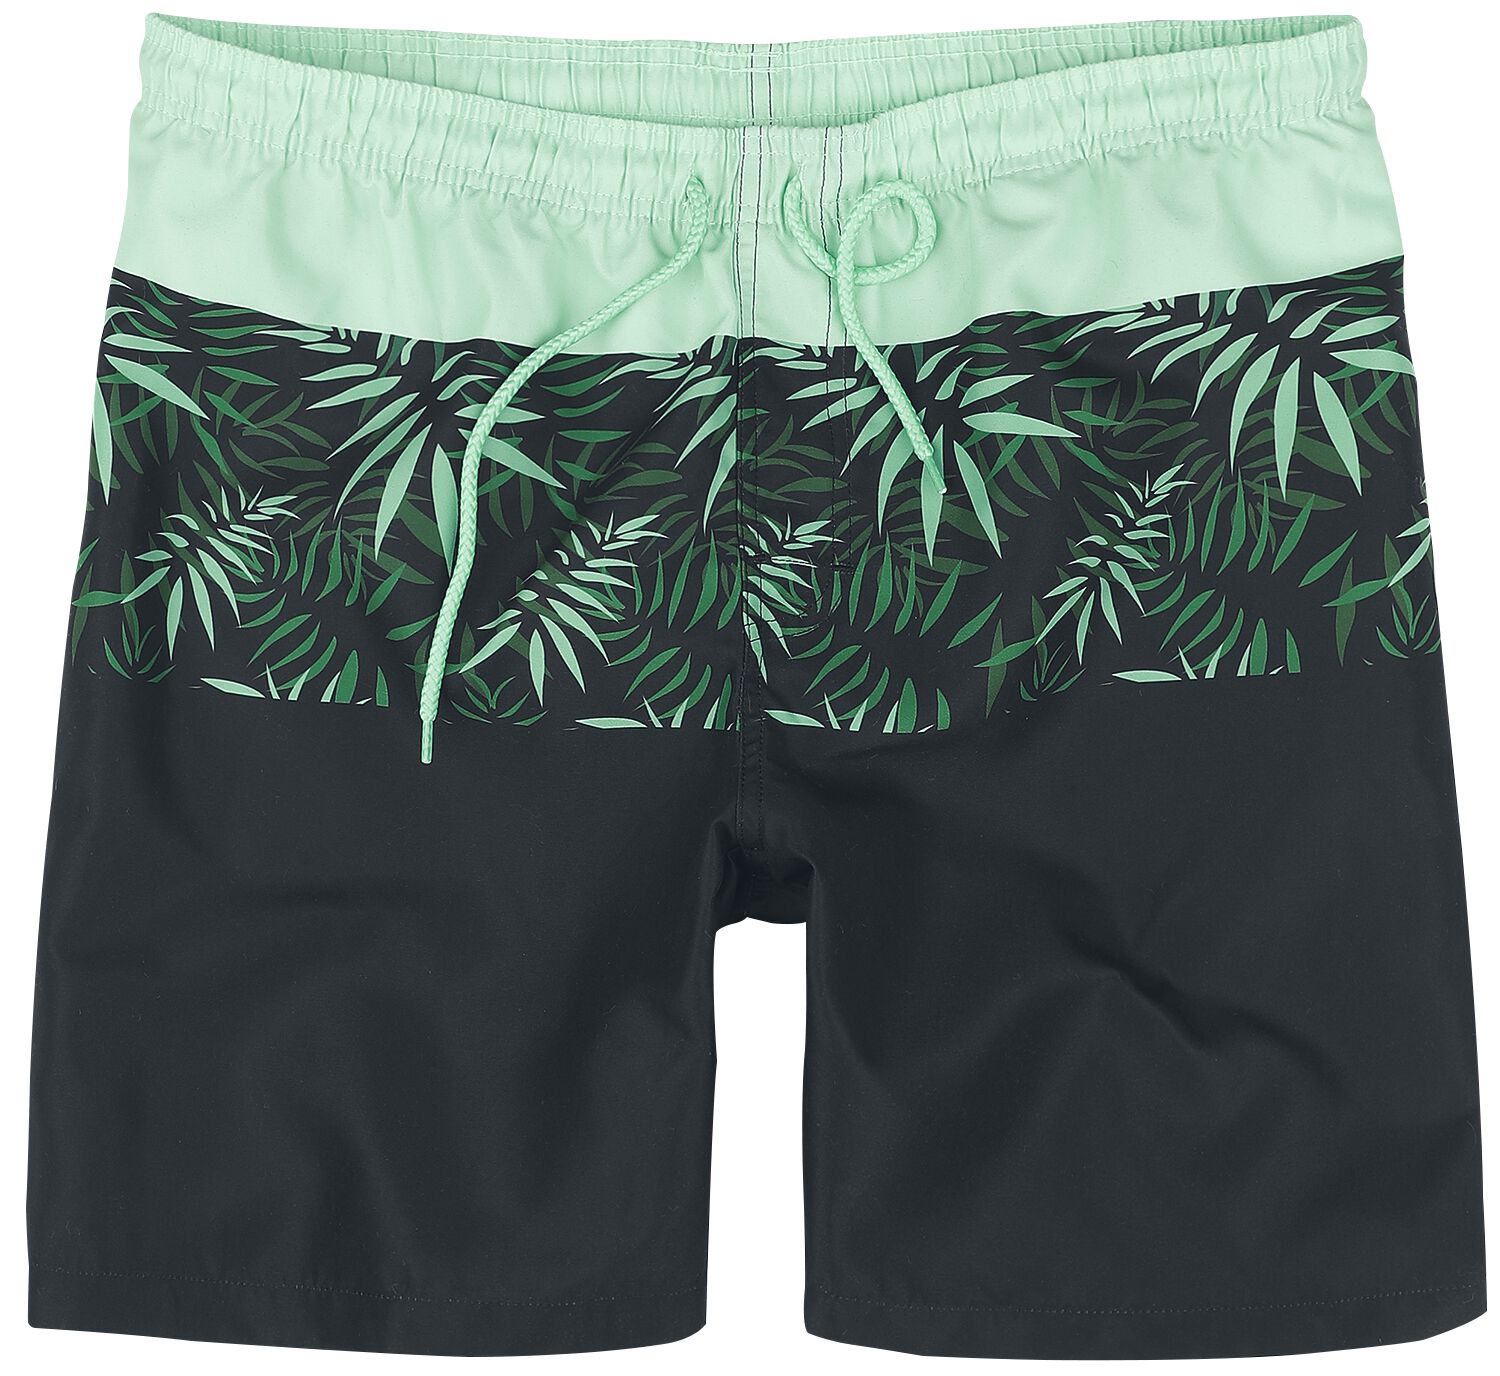 RED by EMP Swim Shorts With Palm Trees Badeshort schwarz grün in L